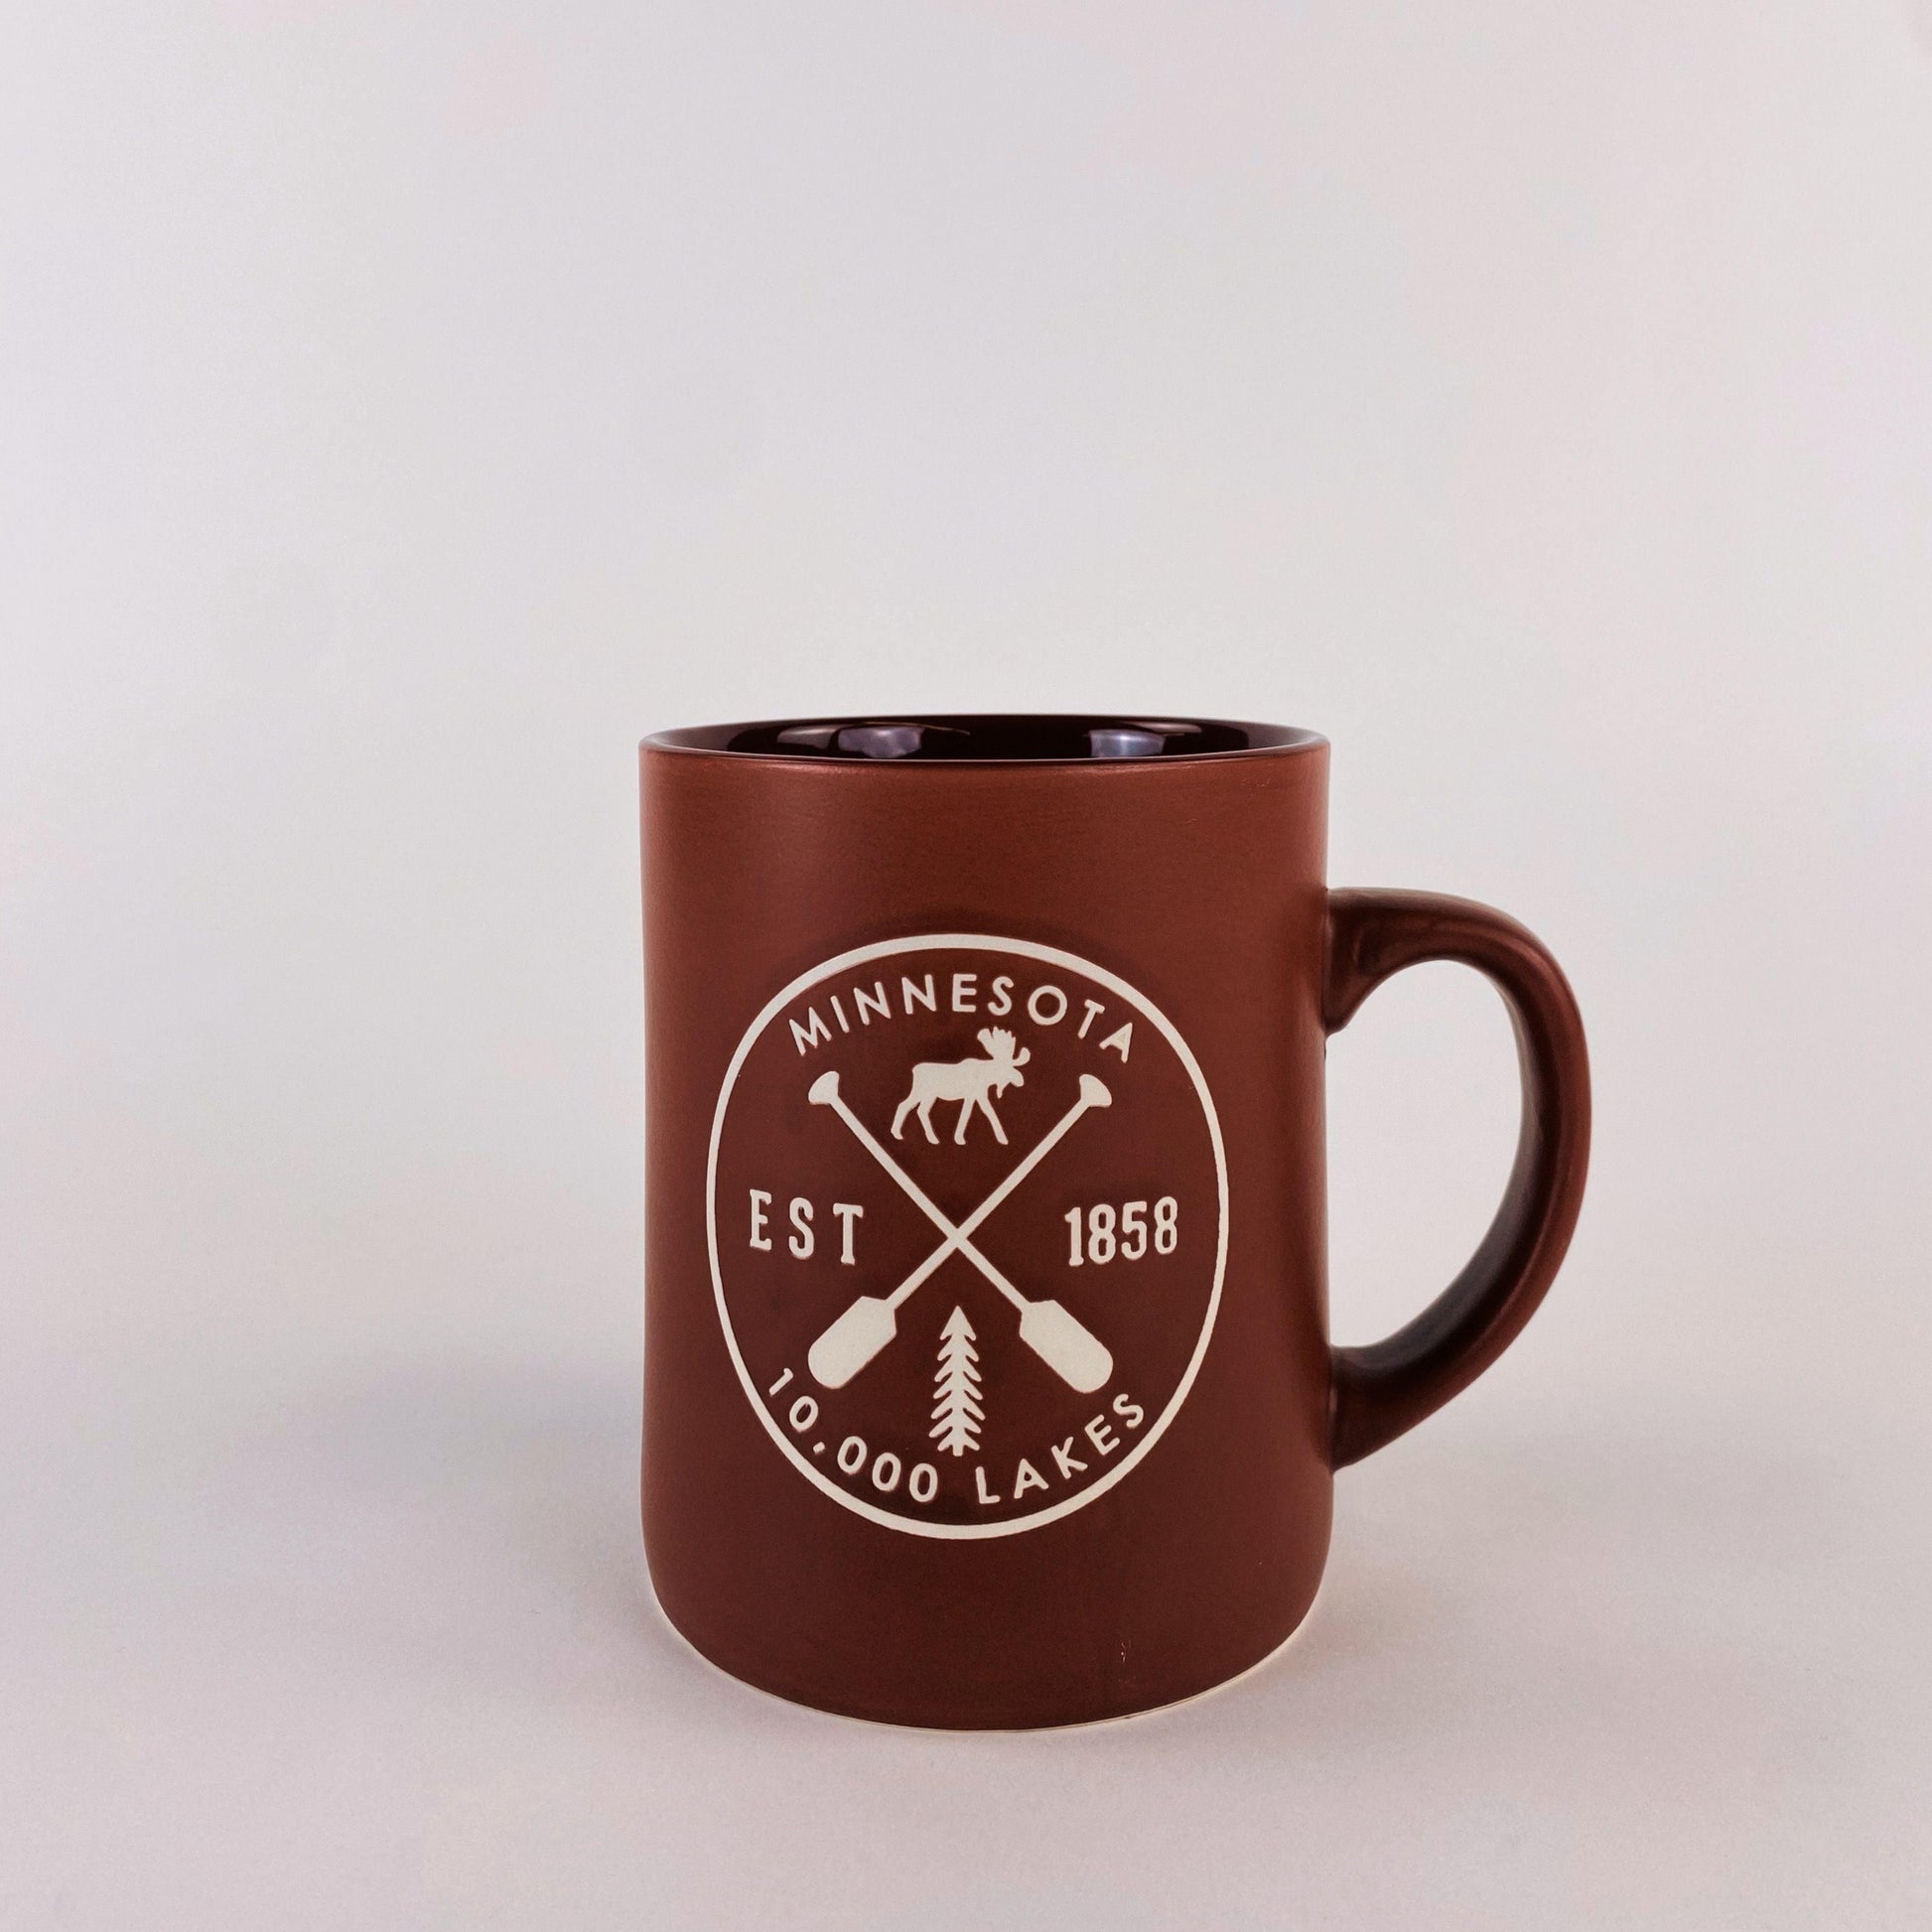 Minnesota Established Crest Red Brick Mug - Love From USA